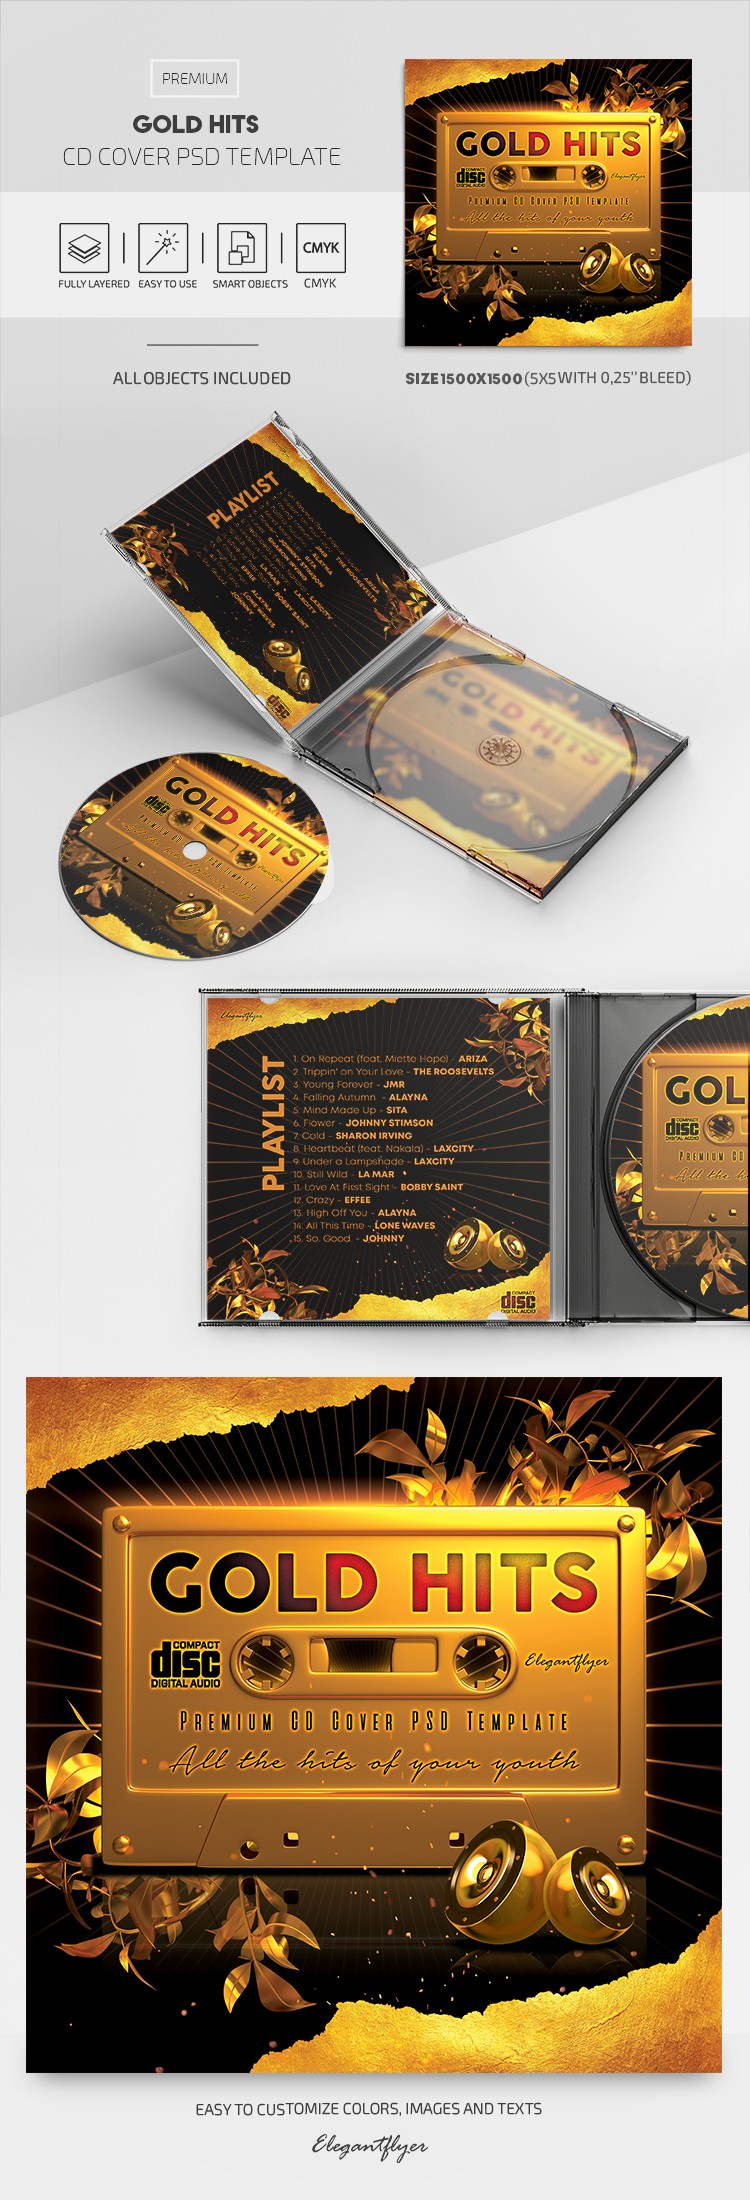 Capa do CD Gold Hits by ElegantFlyer